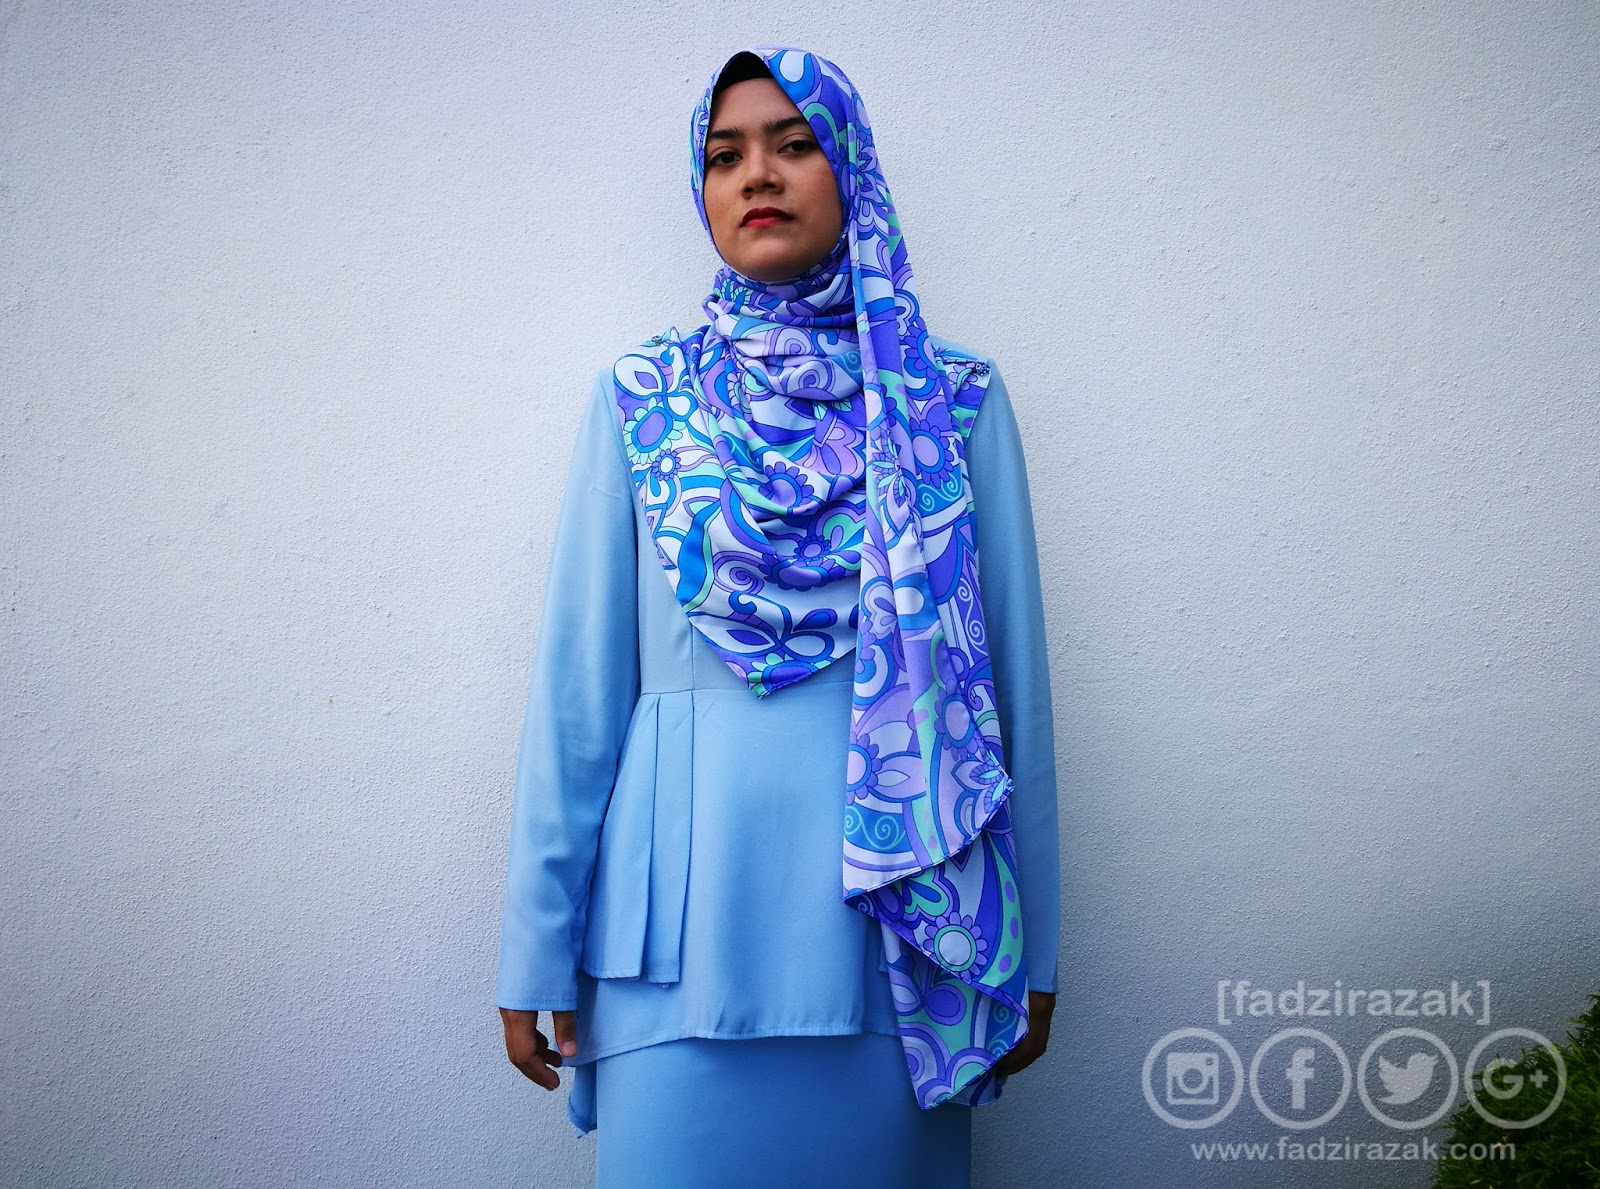 Beli Baju  Raya Online Di  Shopee  Fadzi Razak  Malaysian 